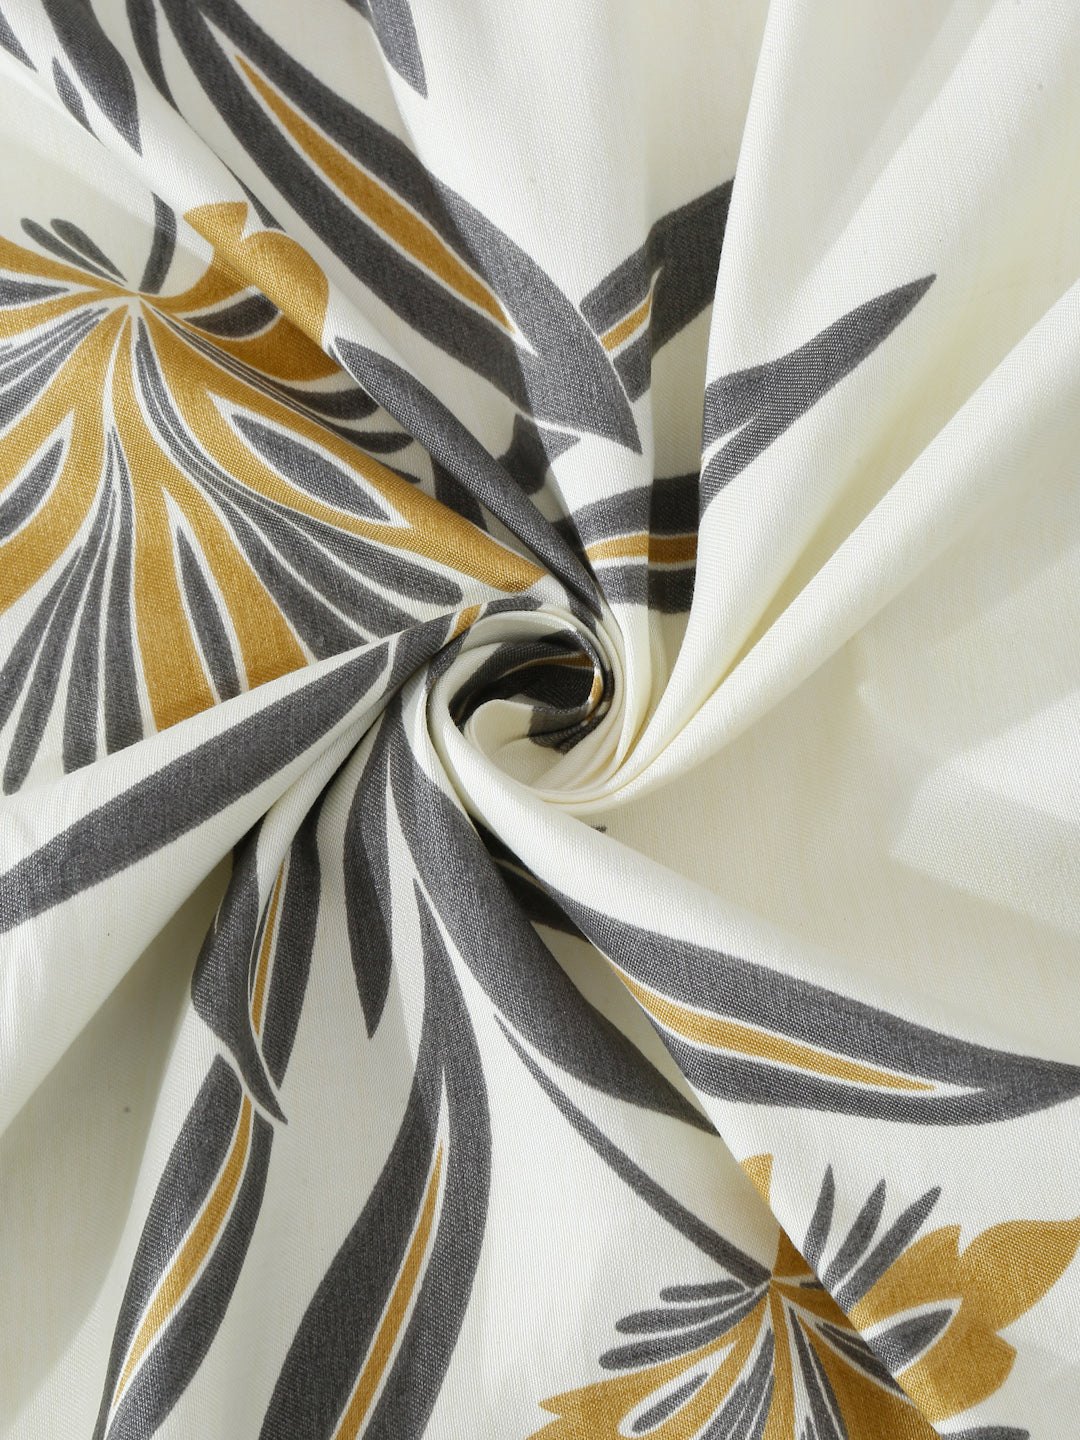 Klotthe Multicolor Floral 300 TC Cotton Blend Super King Double Bedsheet Set in Book Fold Packing (270X270 cm)